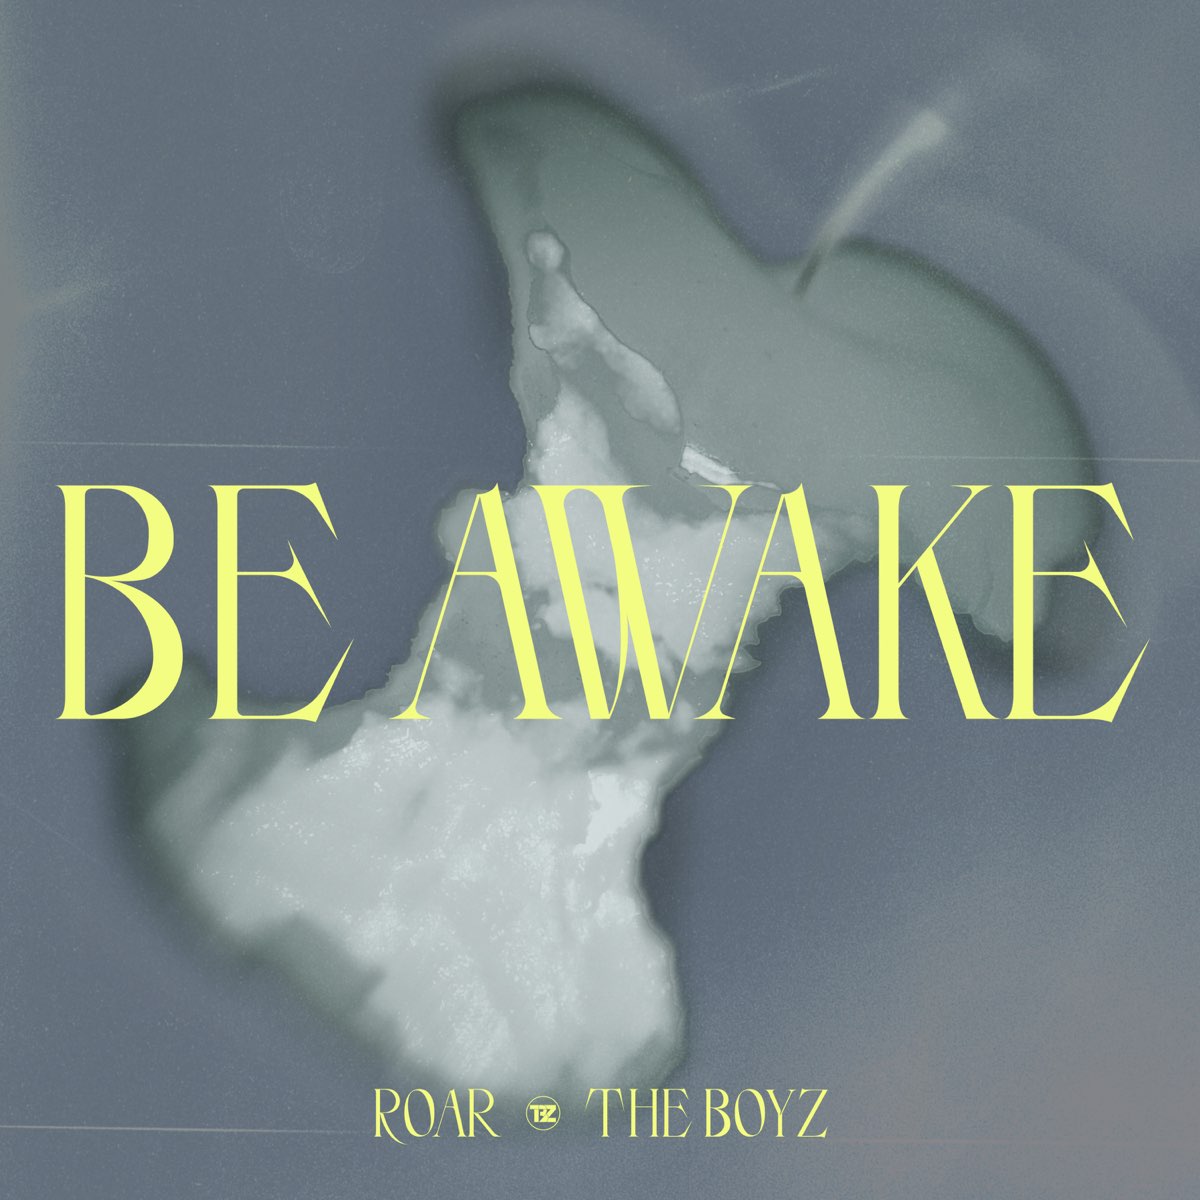 THE BOYZの「THE BOYZ 8TH MINI ALBUM [BE AWAKE] - EP」をApple Musicで